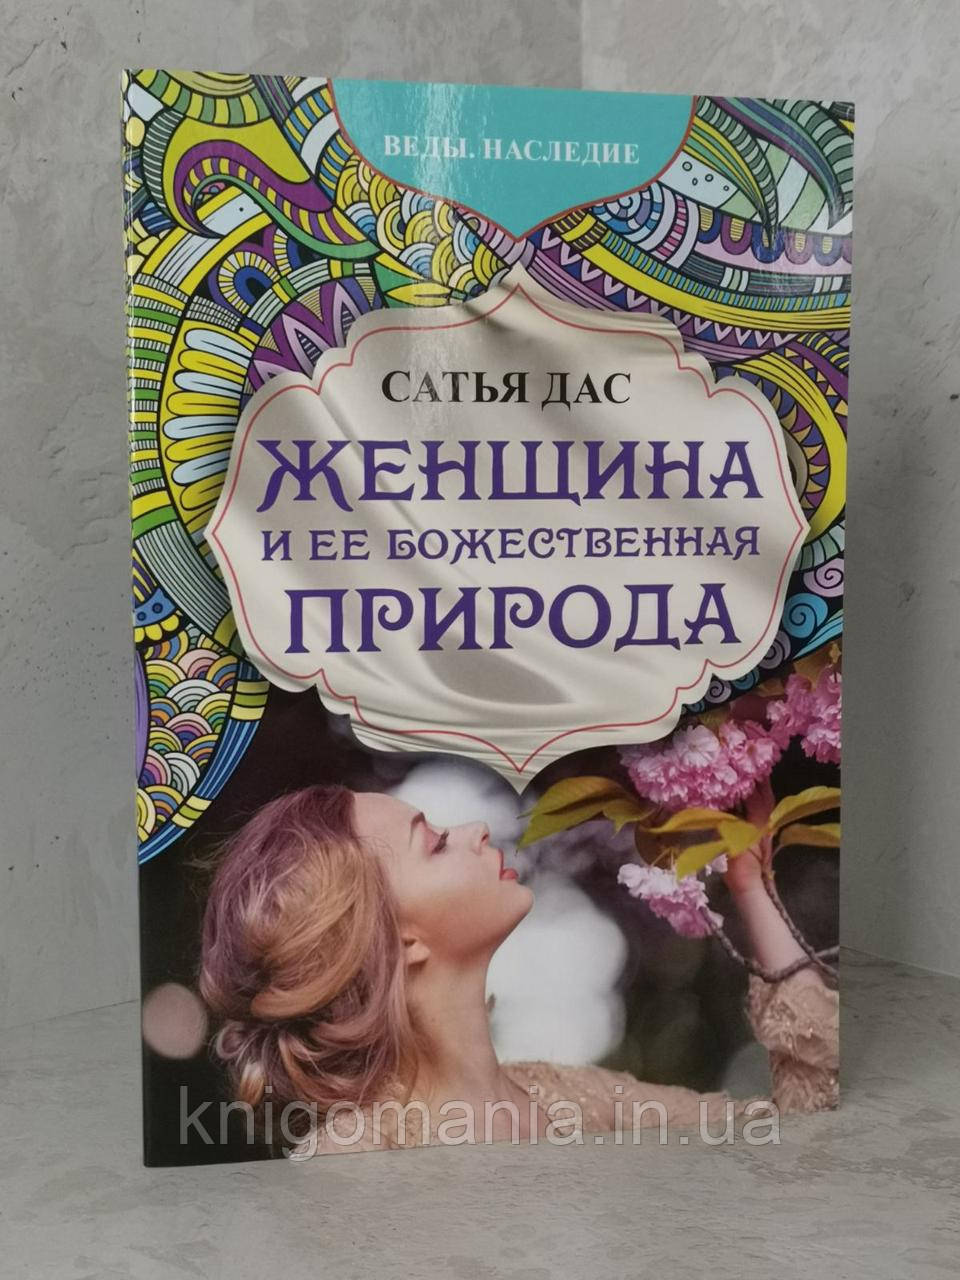 Книга "Жінка і її божественна ПРИРОДА" Сатья Дас.